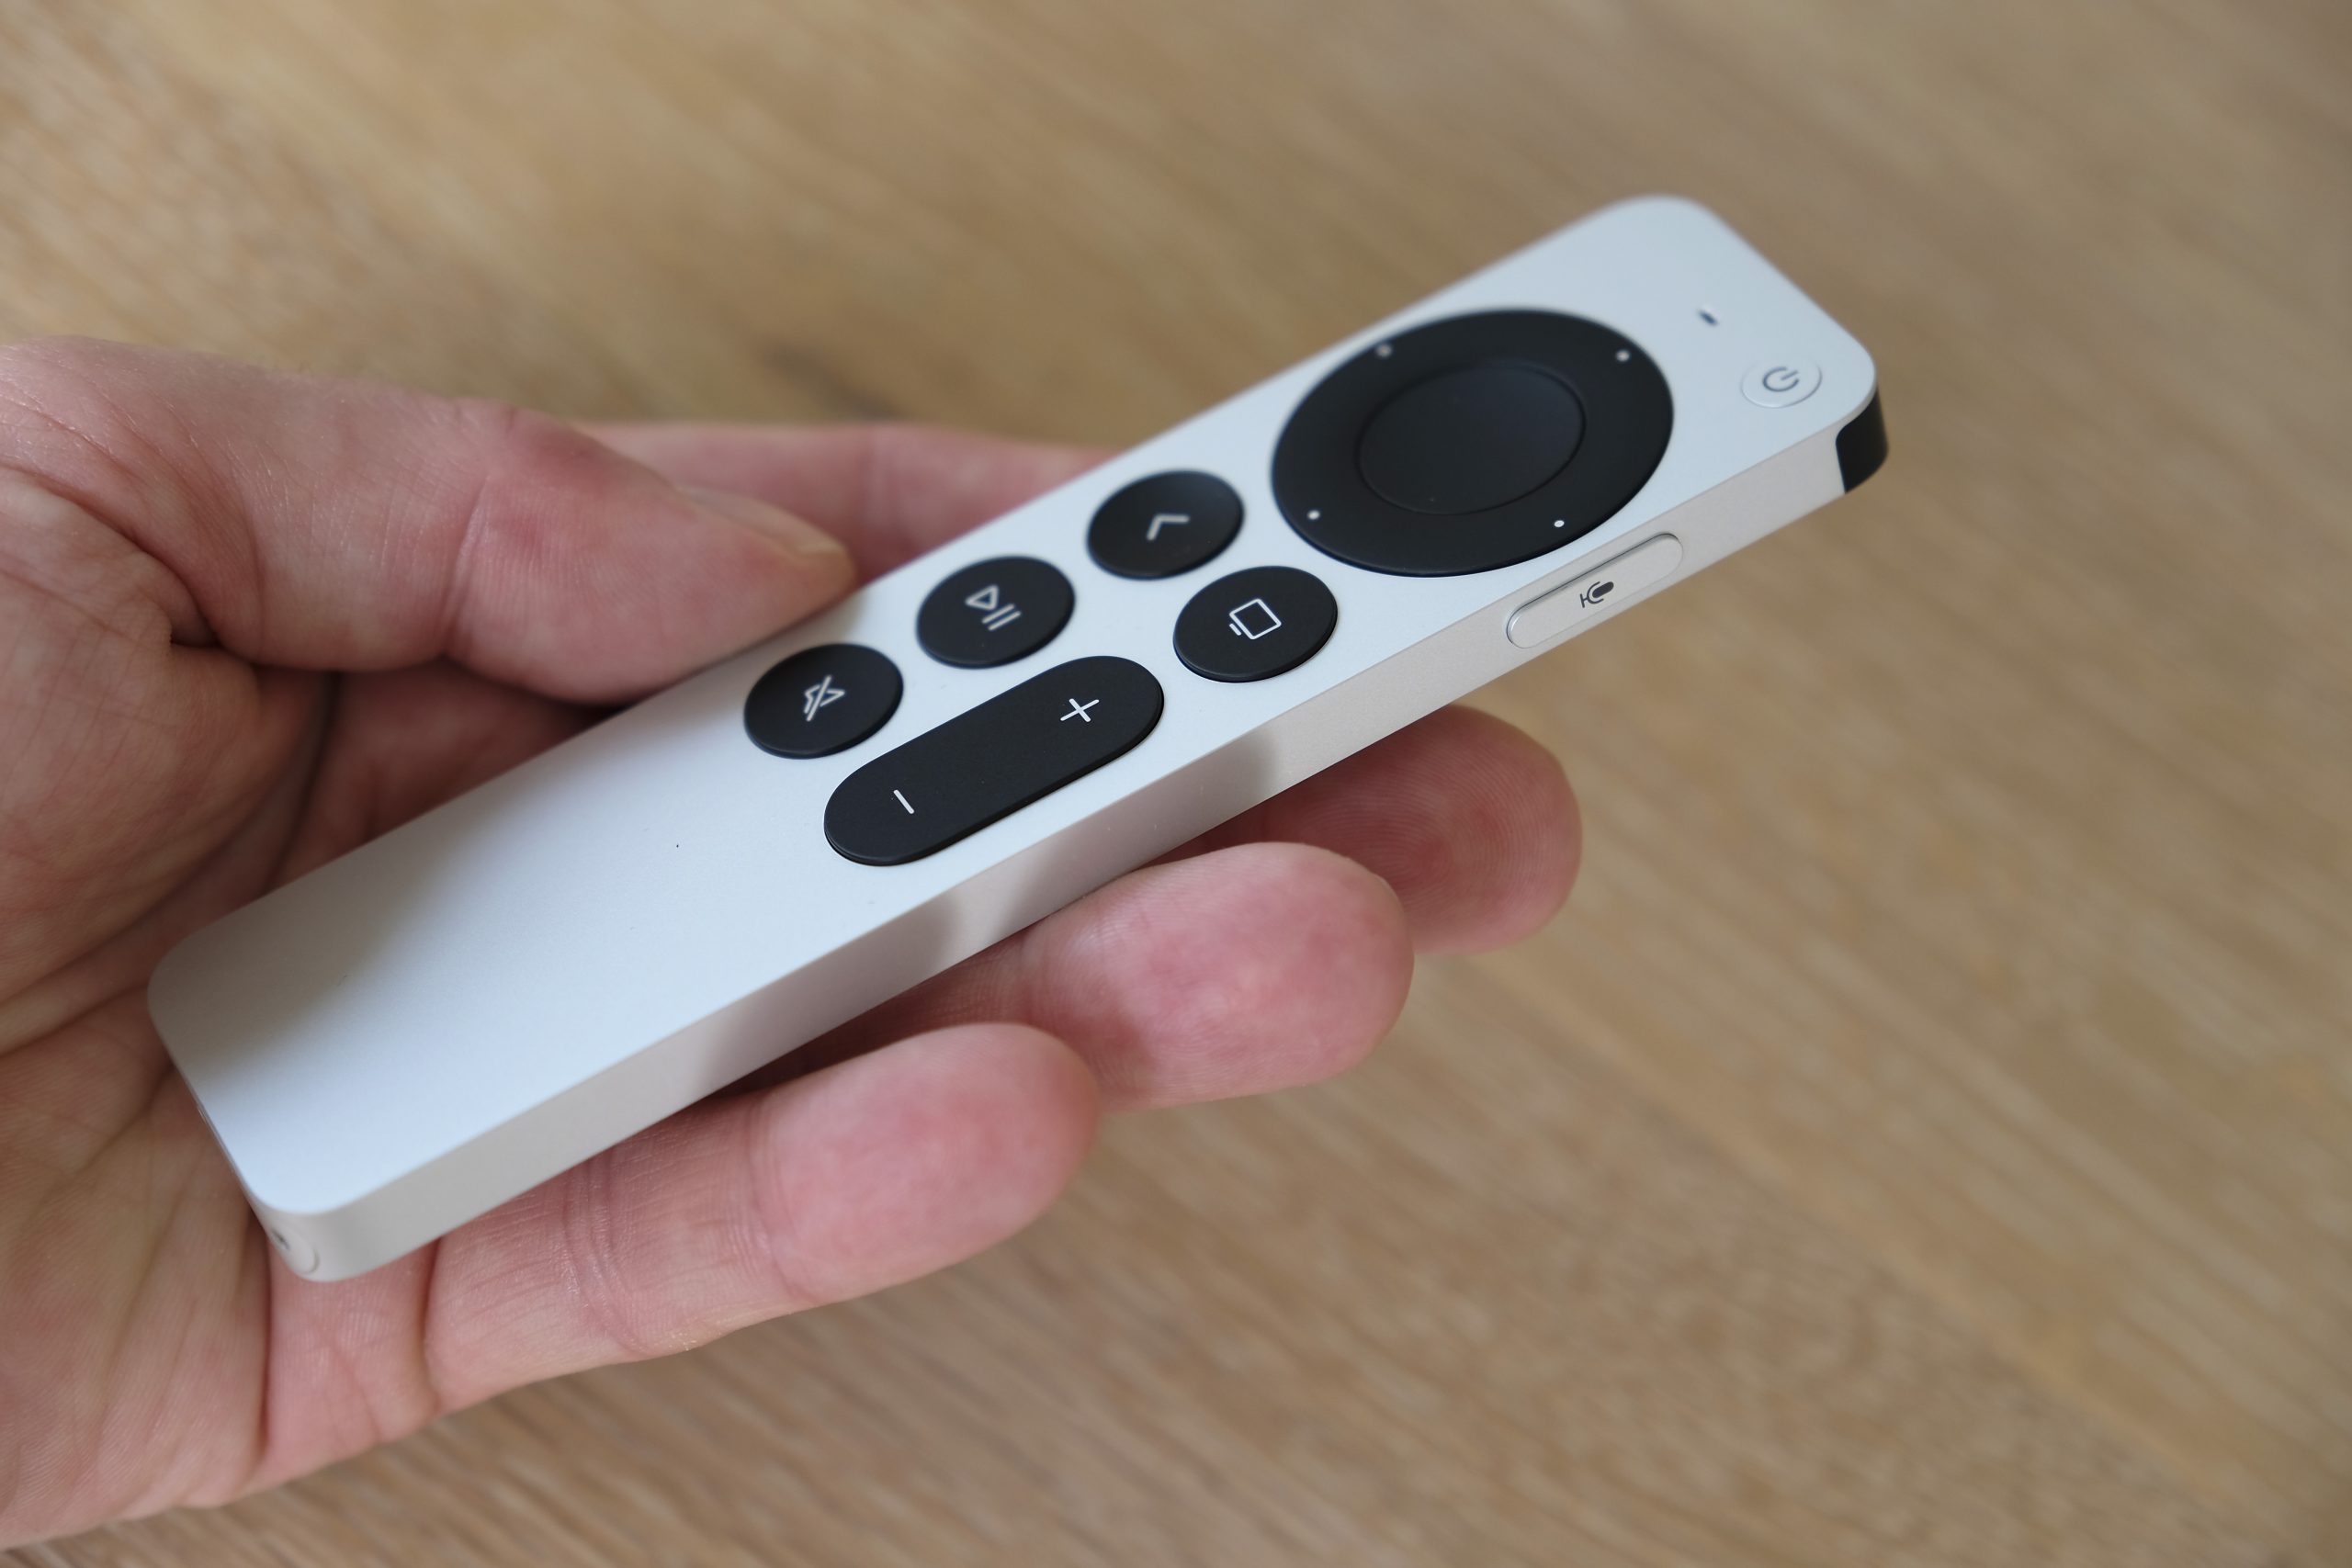 ipad remote for apple tv